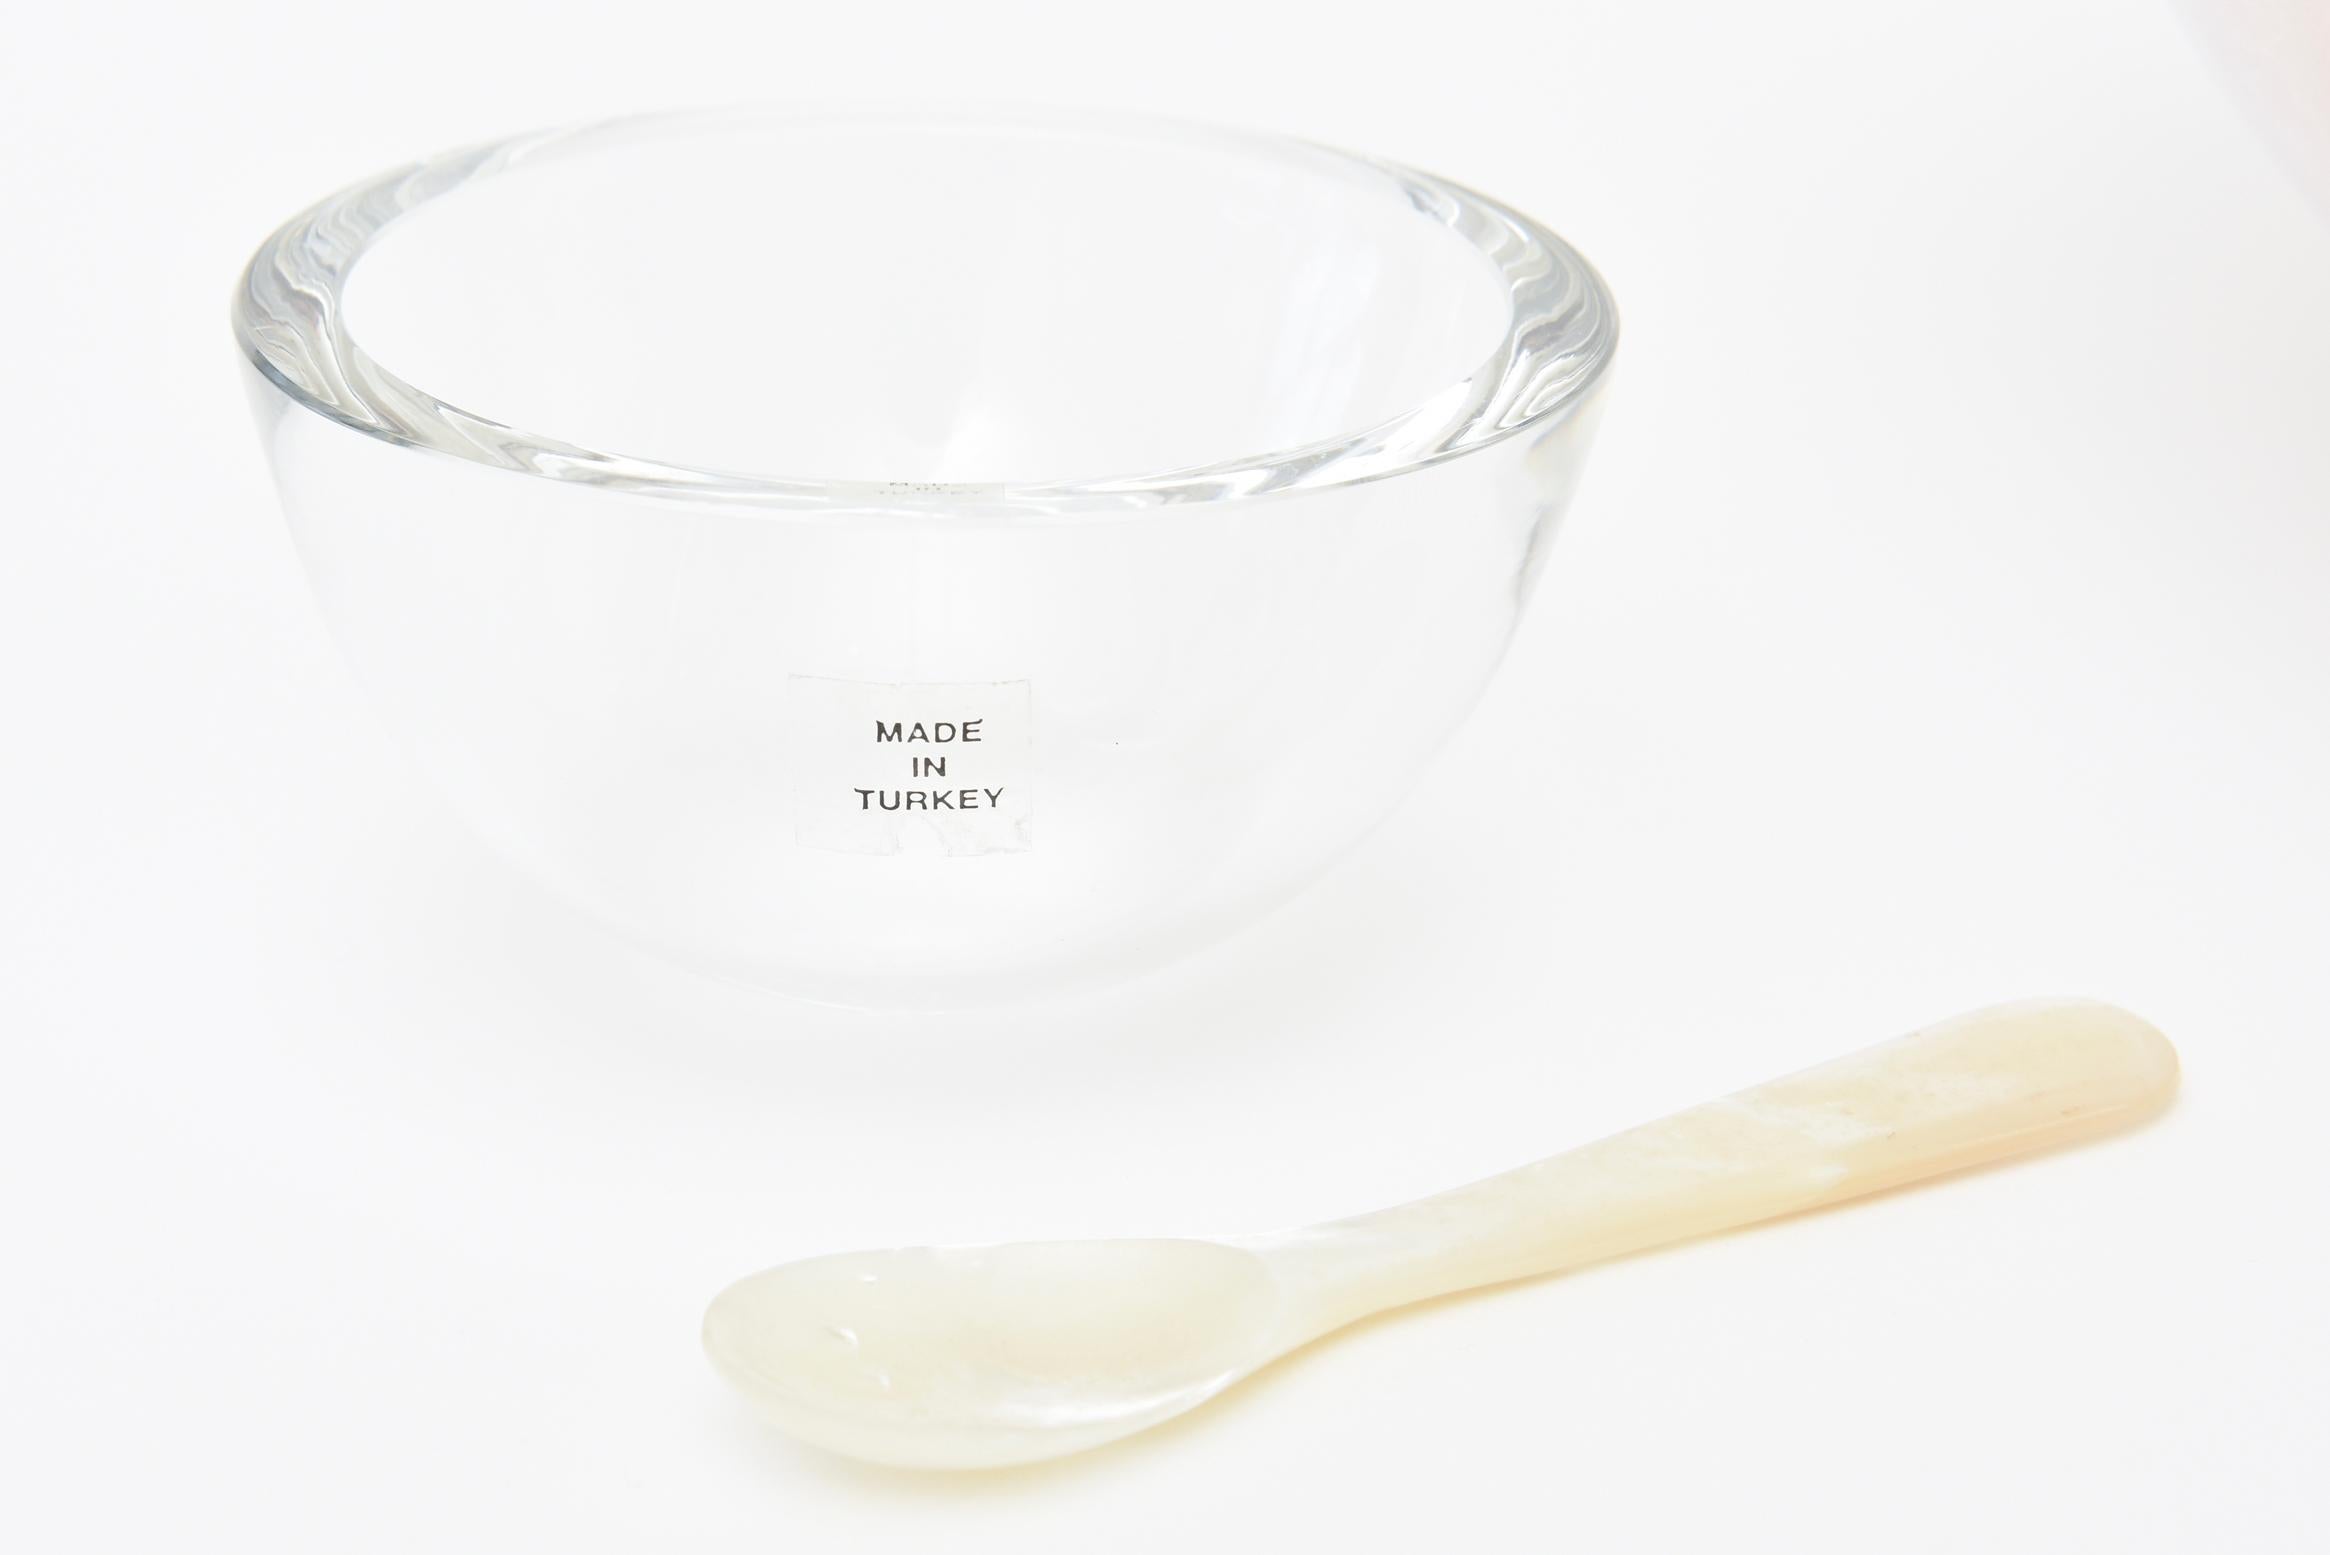 Late 20th Century Calvin Klein for Swid Powell Silver Plate Caviar Bowl Barware